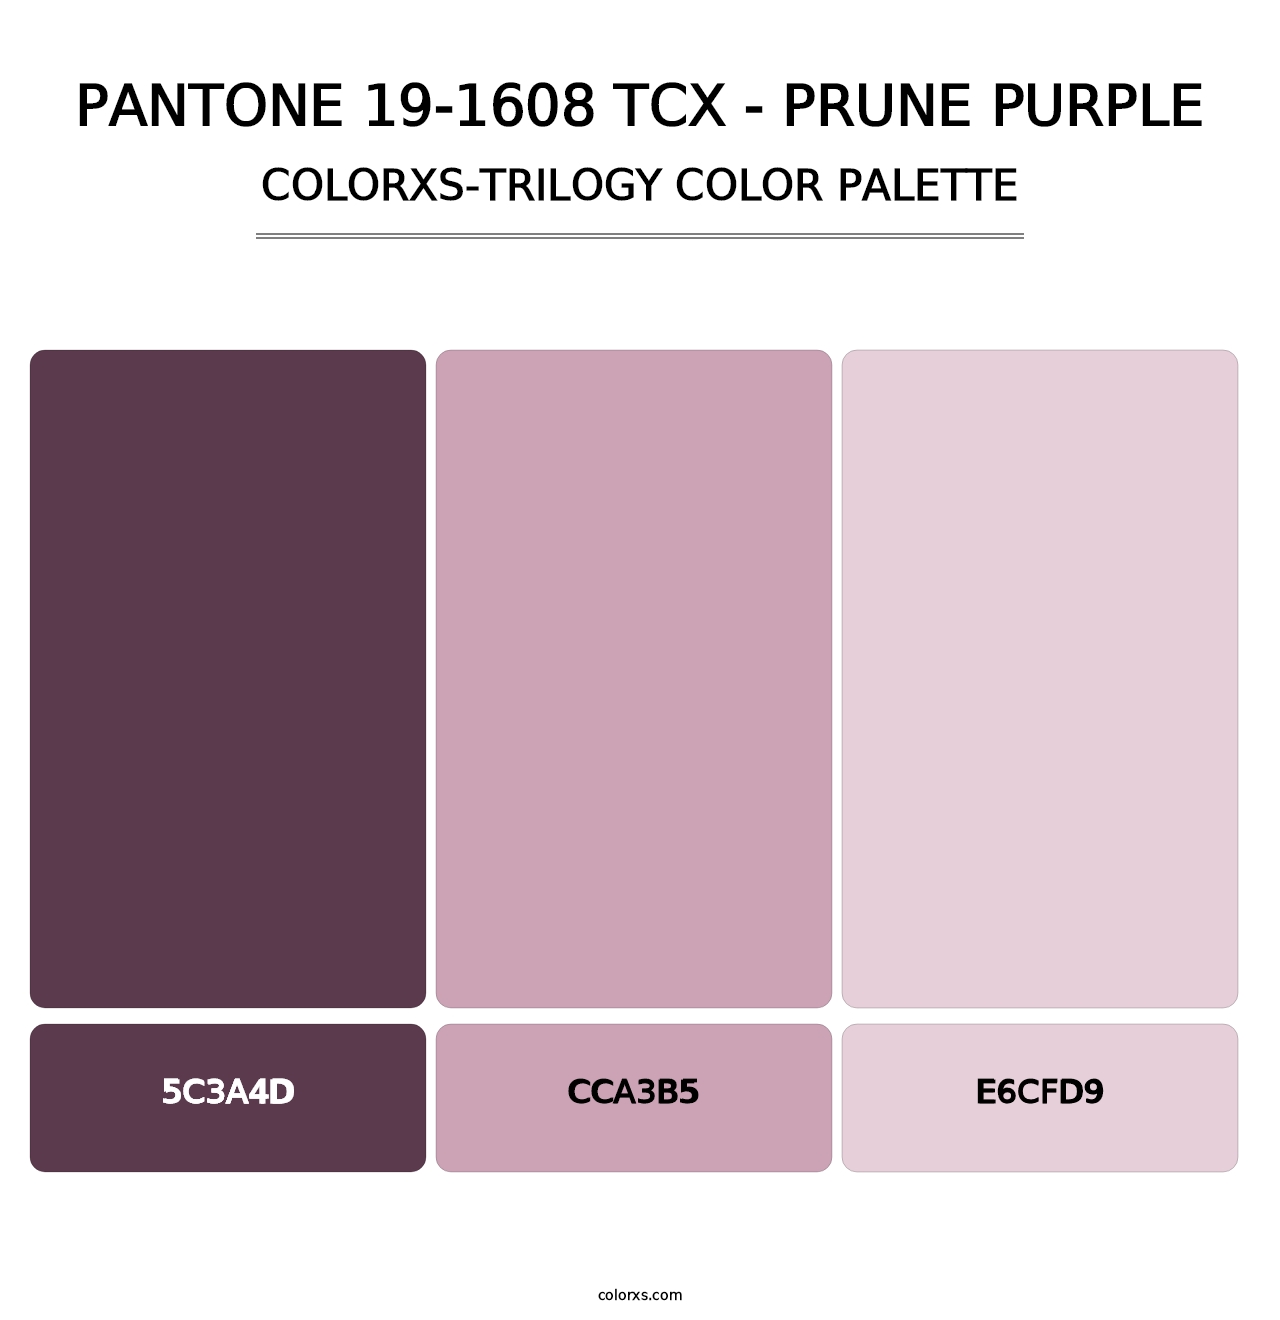 PANTONE 19-1608 TCX - Prune Purple - Colorxs Trilogy Palette